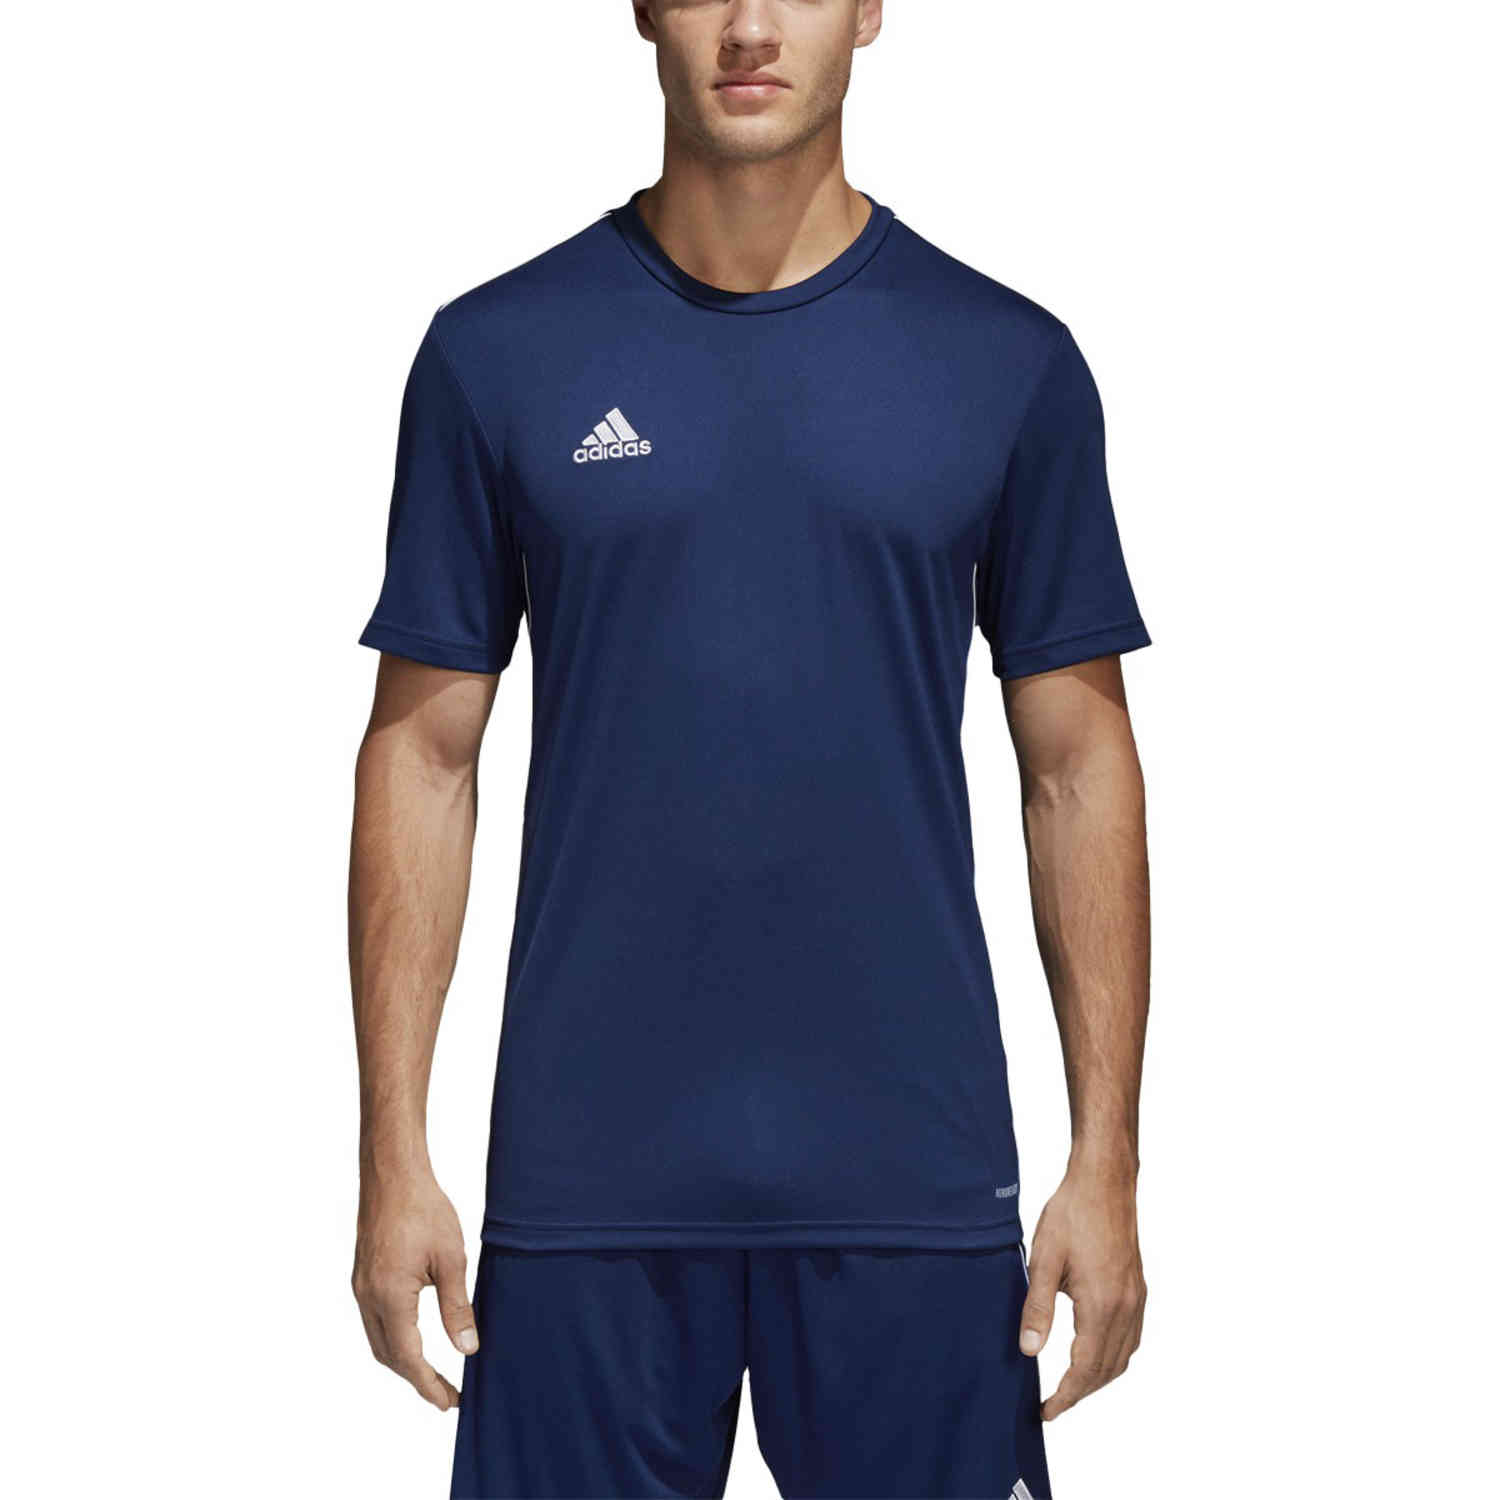 adidas Core 18 Training Jersey - Dark Blue/White - SoccerPro